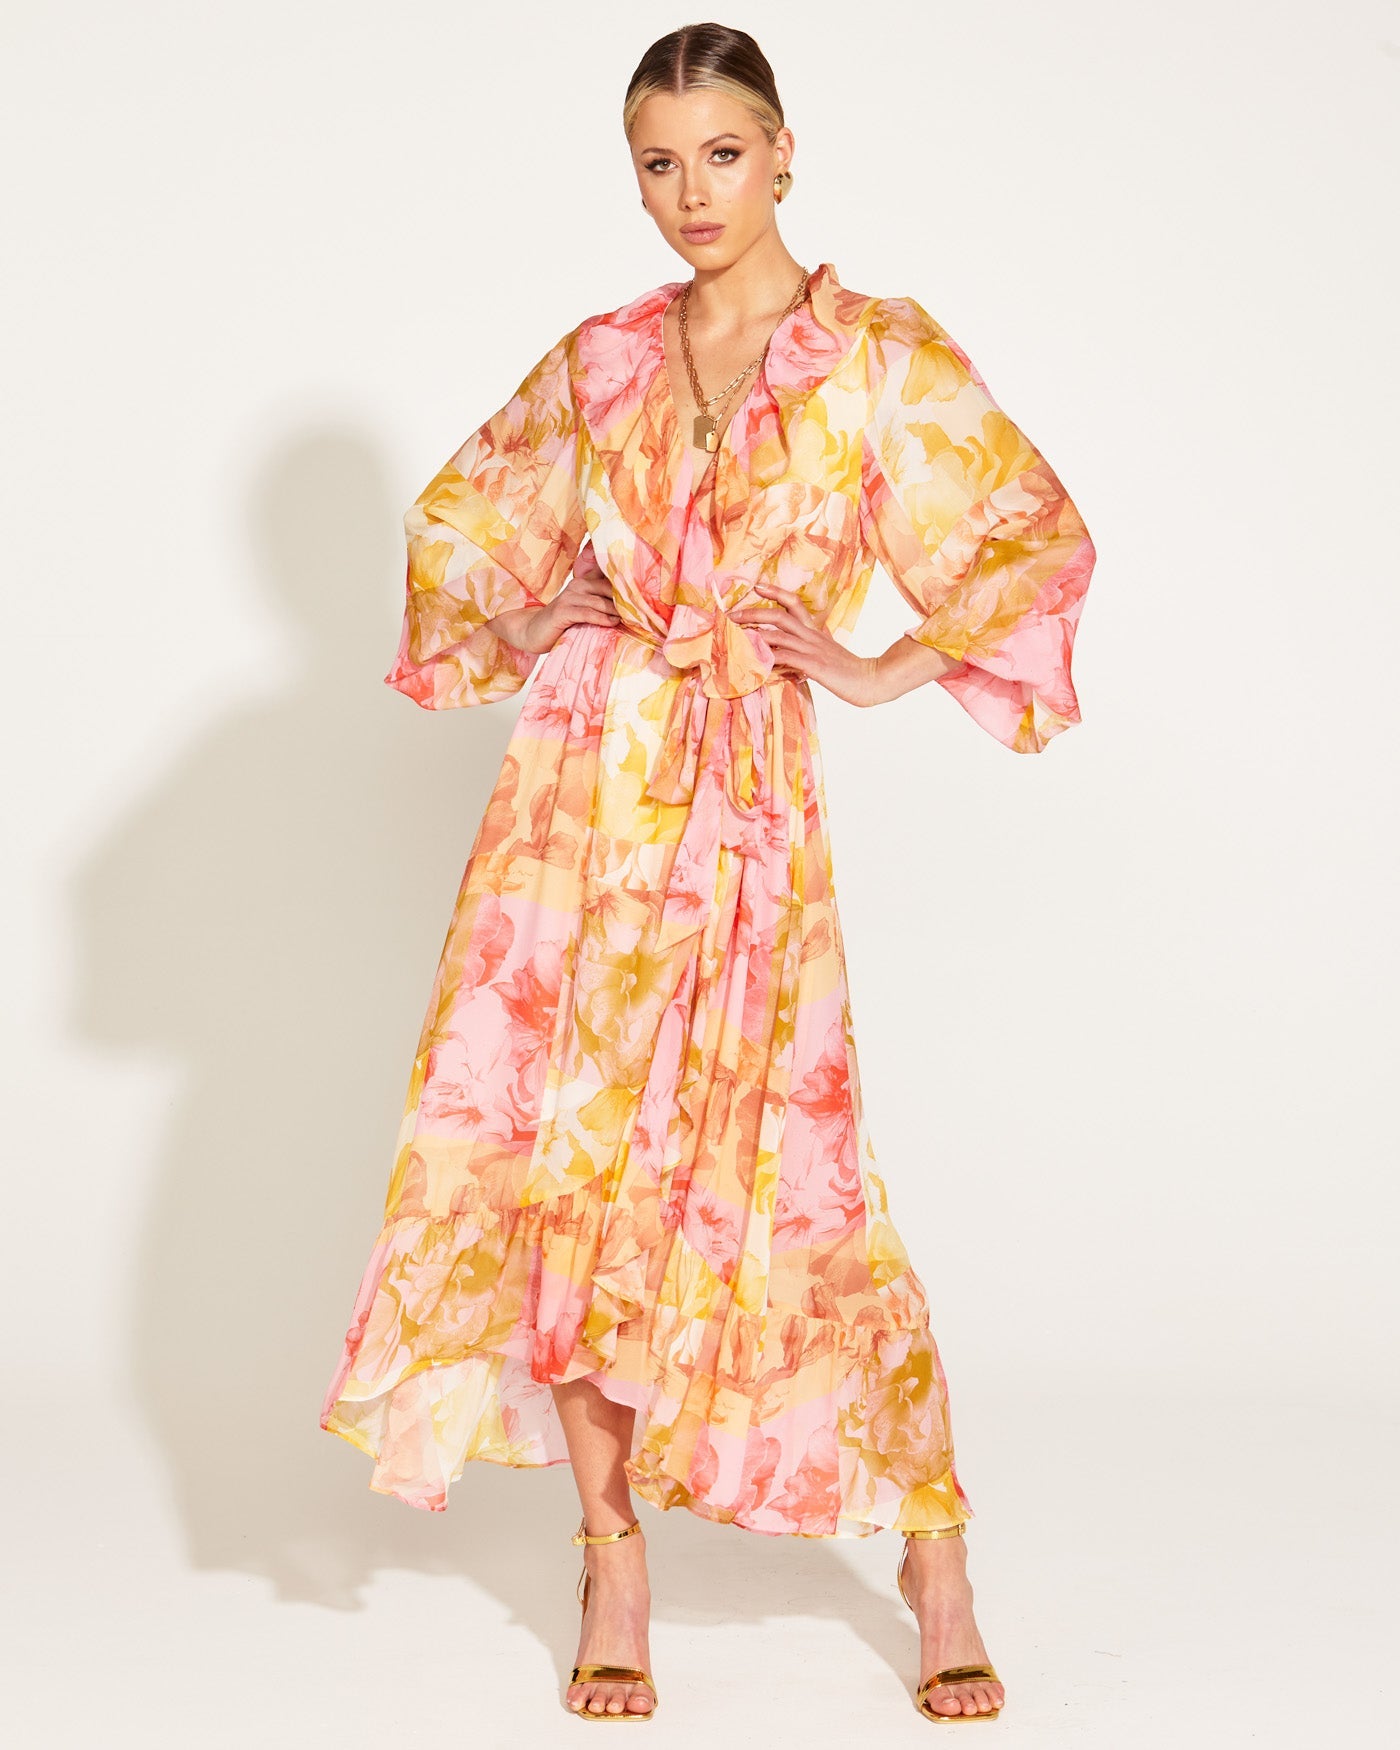 Fate+Becker Earthly Paradise Long Sleeve Wrap Midi Dress - Paradise Floral